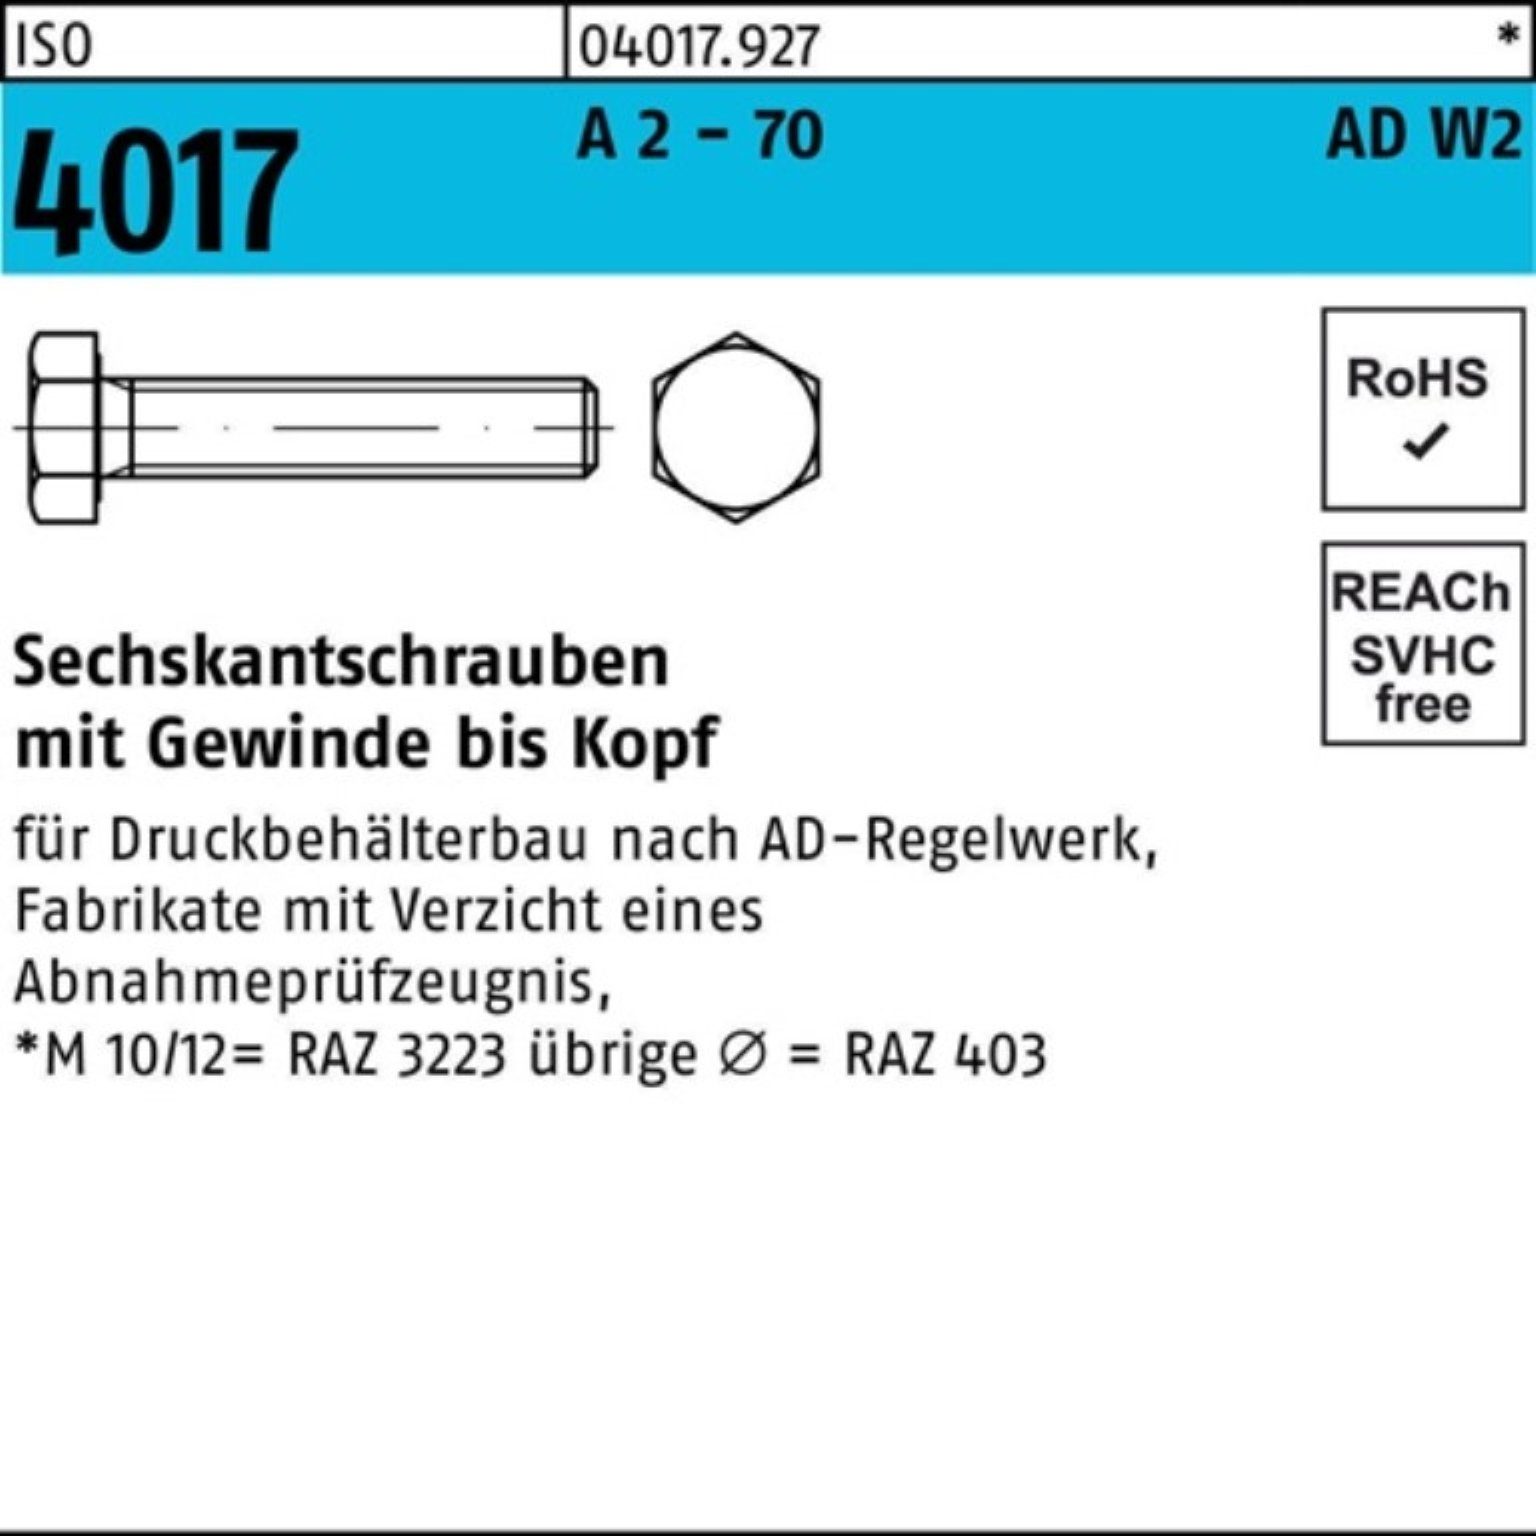 Bufab Sechskantschraube 100er Pack Sechskantschraube ISO 50 2 70 M12x St - 50 A VG AD-W2 4017